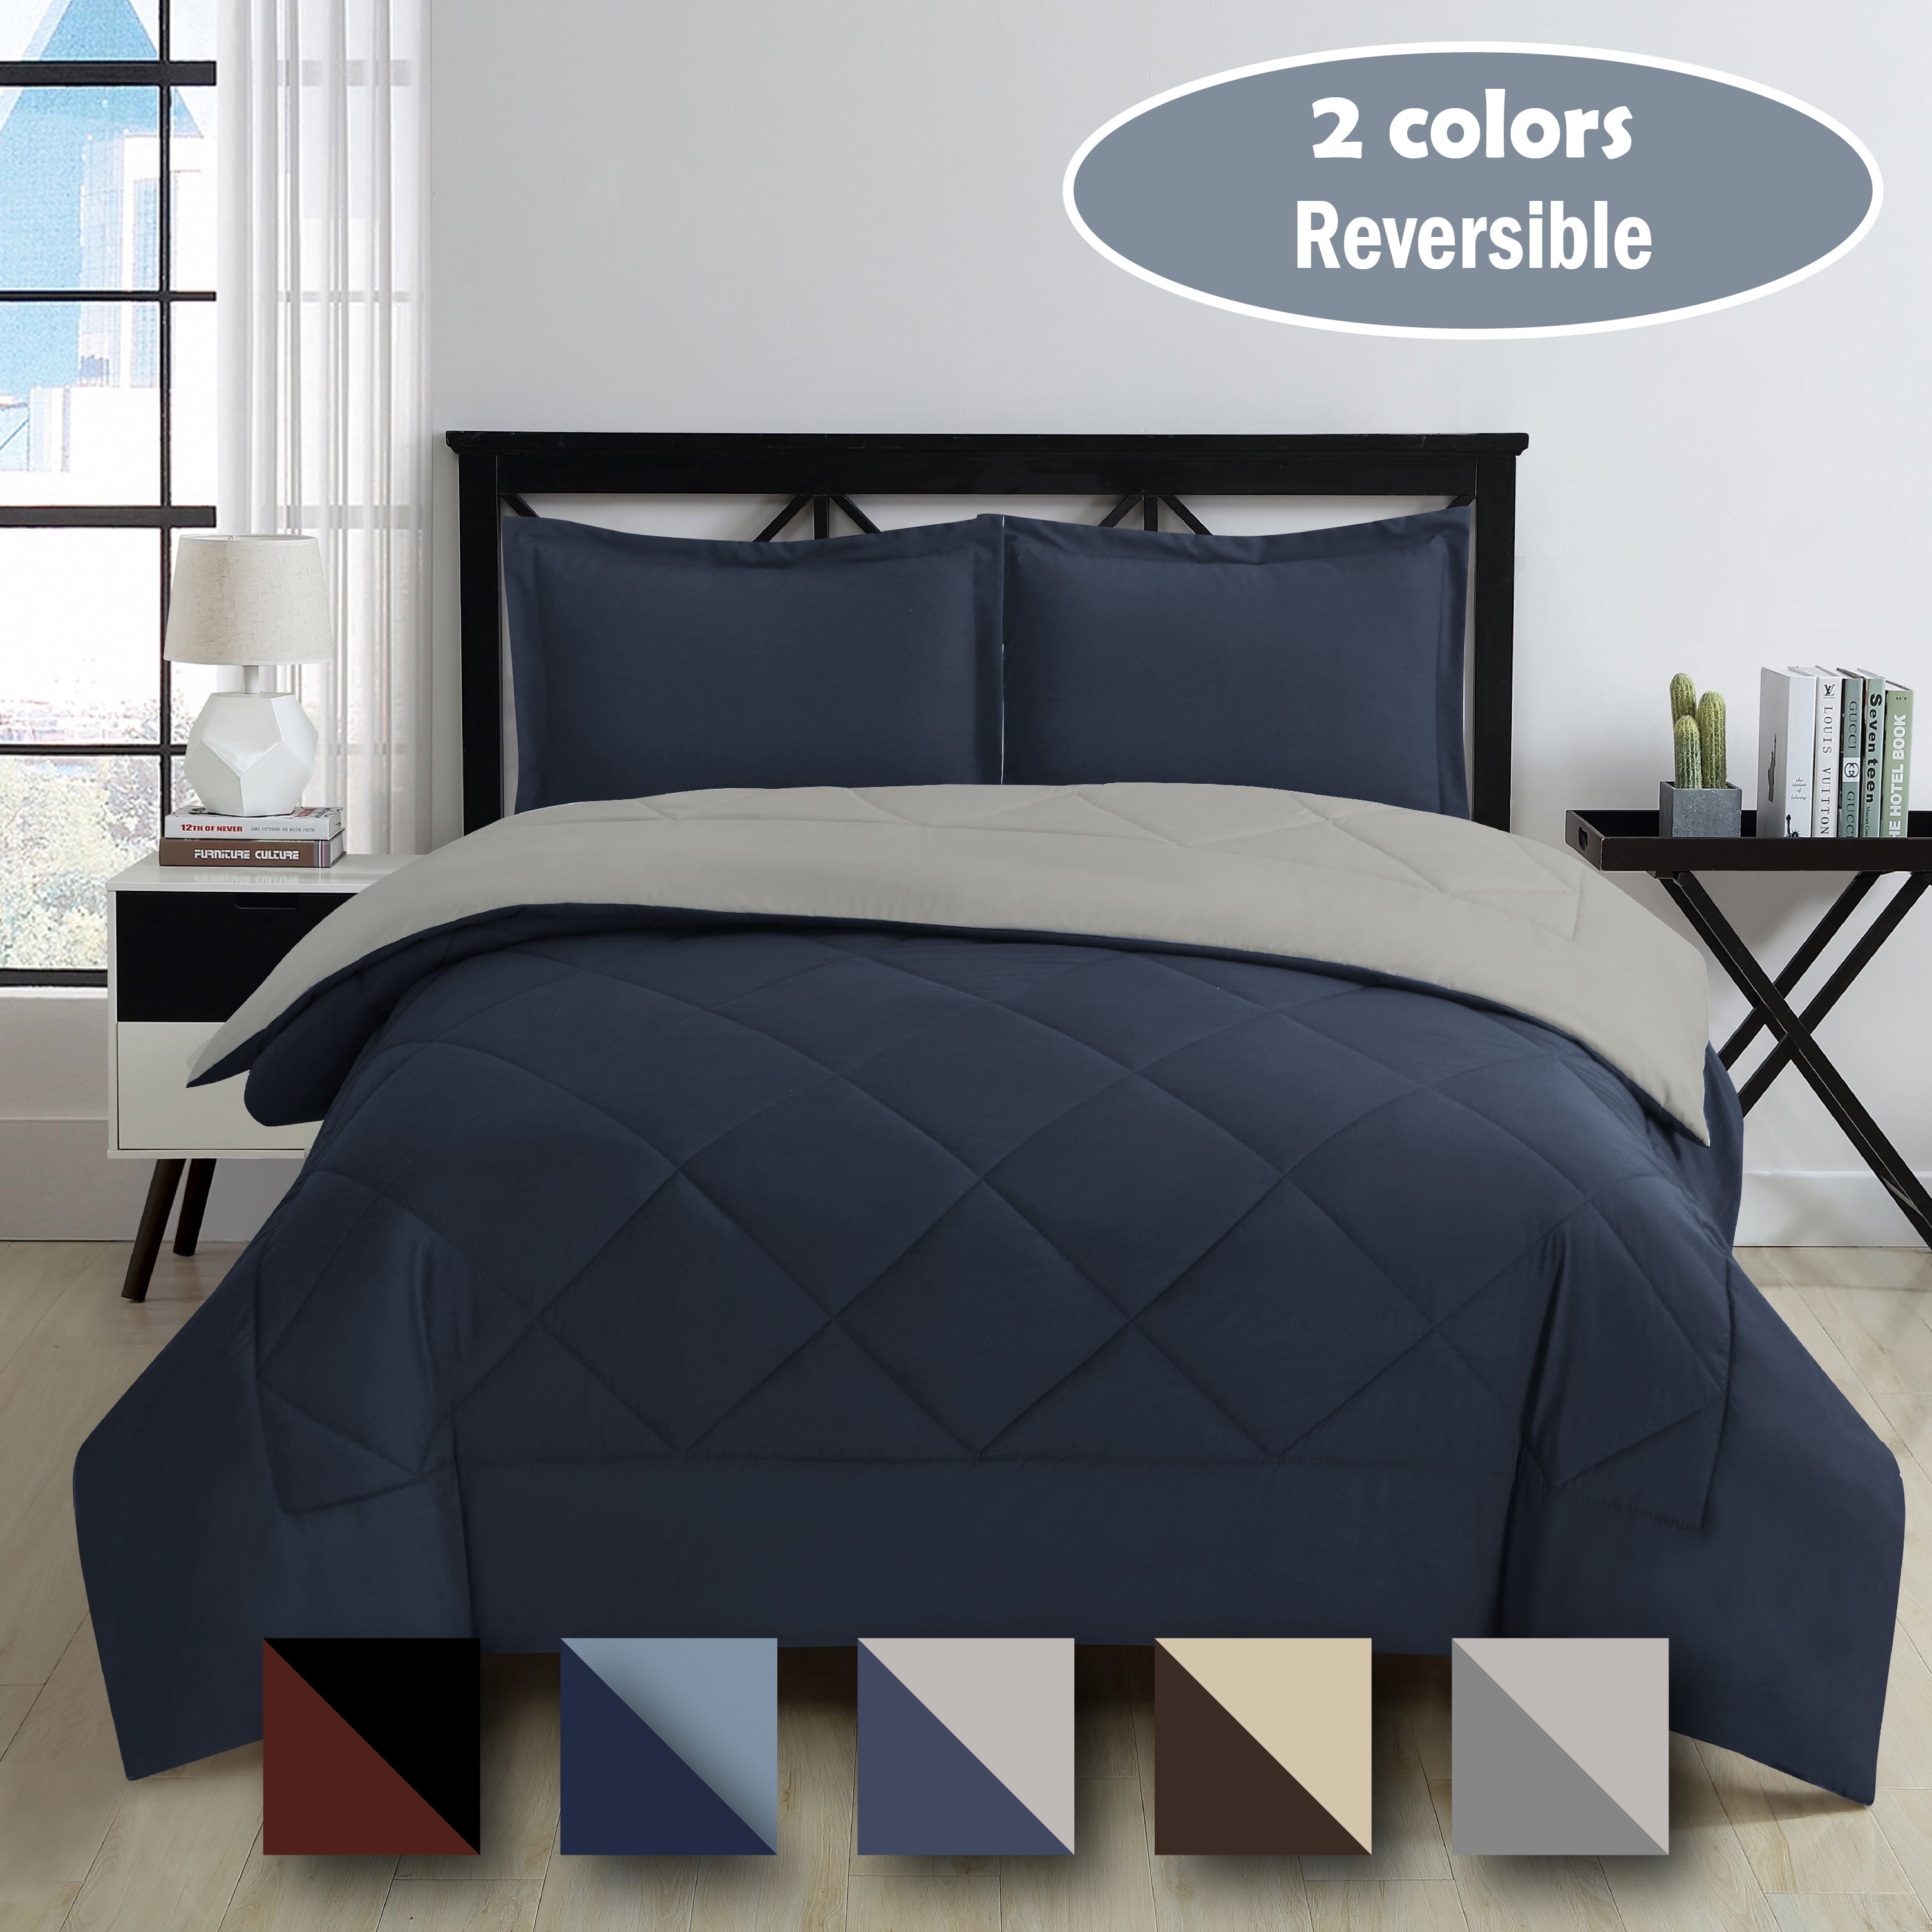 Full/Queen 2 Colors Reversible All Season Comforter & Sham Set, Patriot  Blue/Stone 